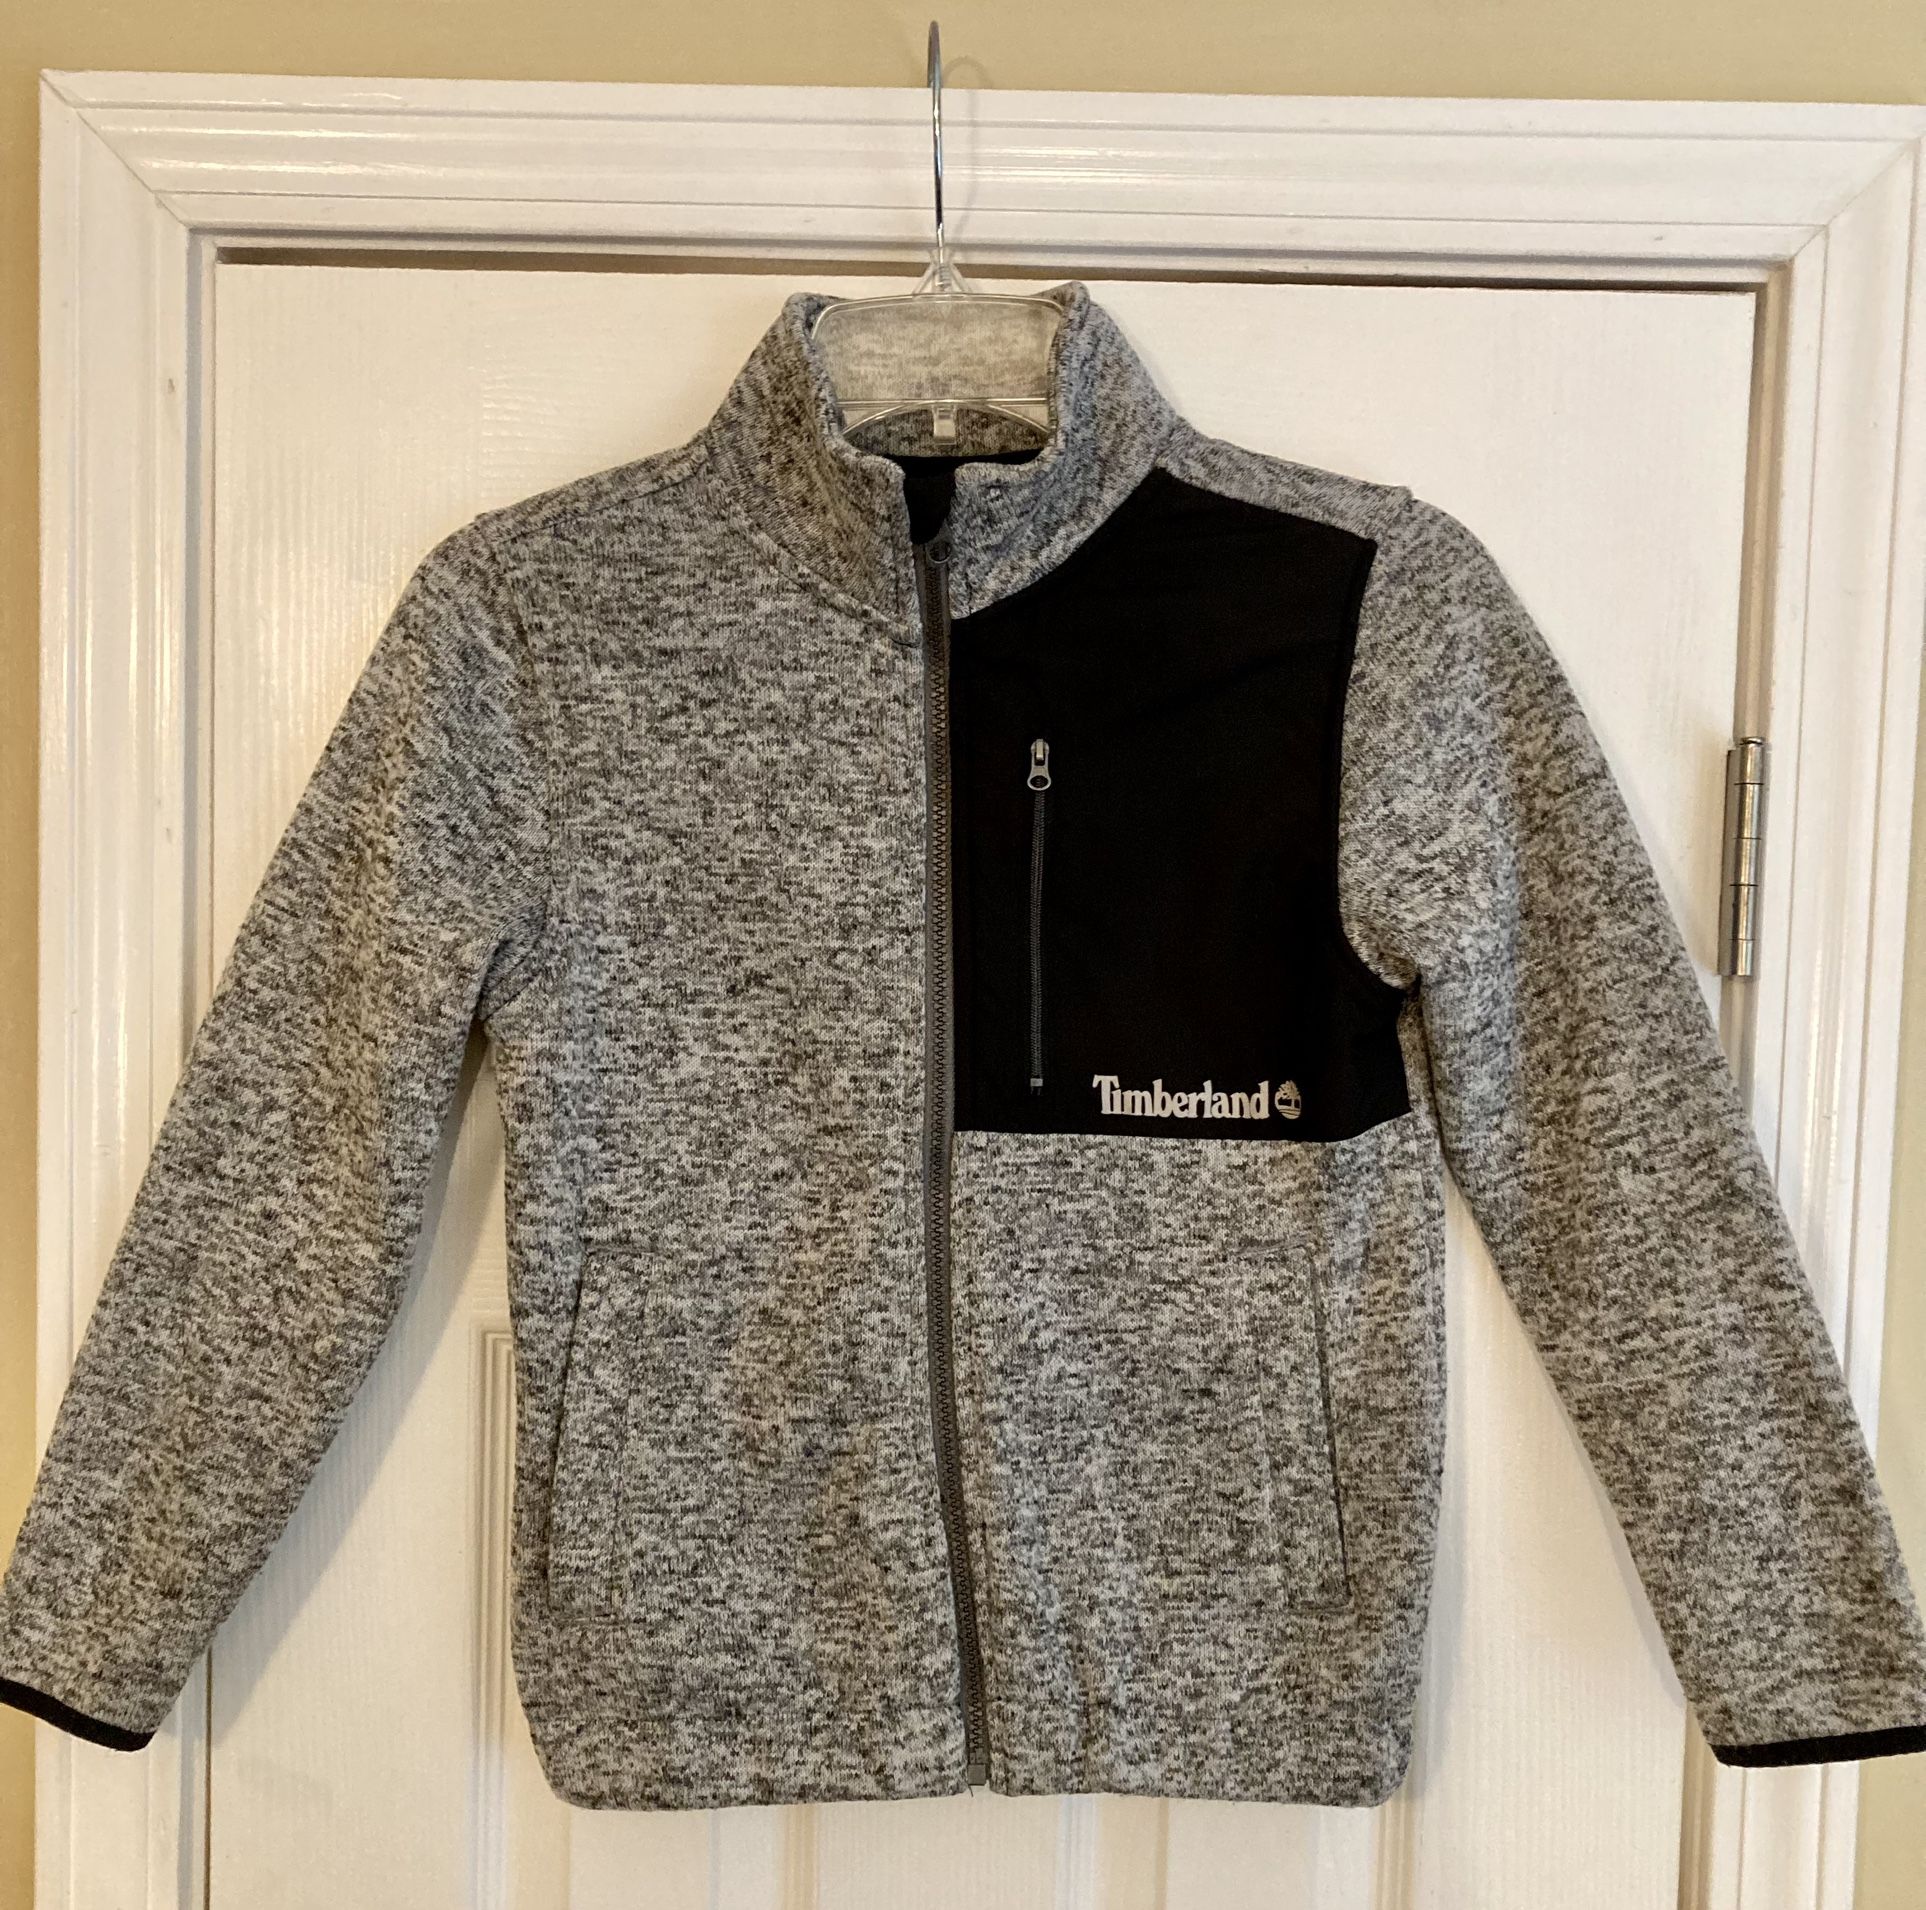 Timberland - Boy’s Jacket Size S8